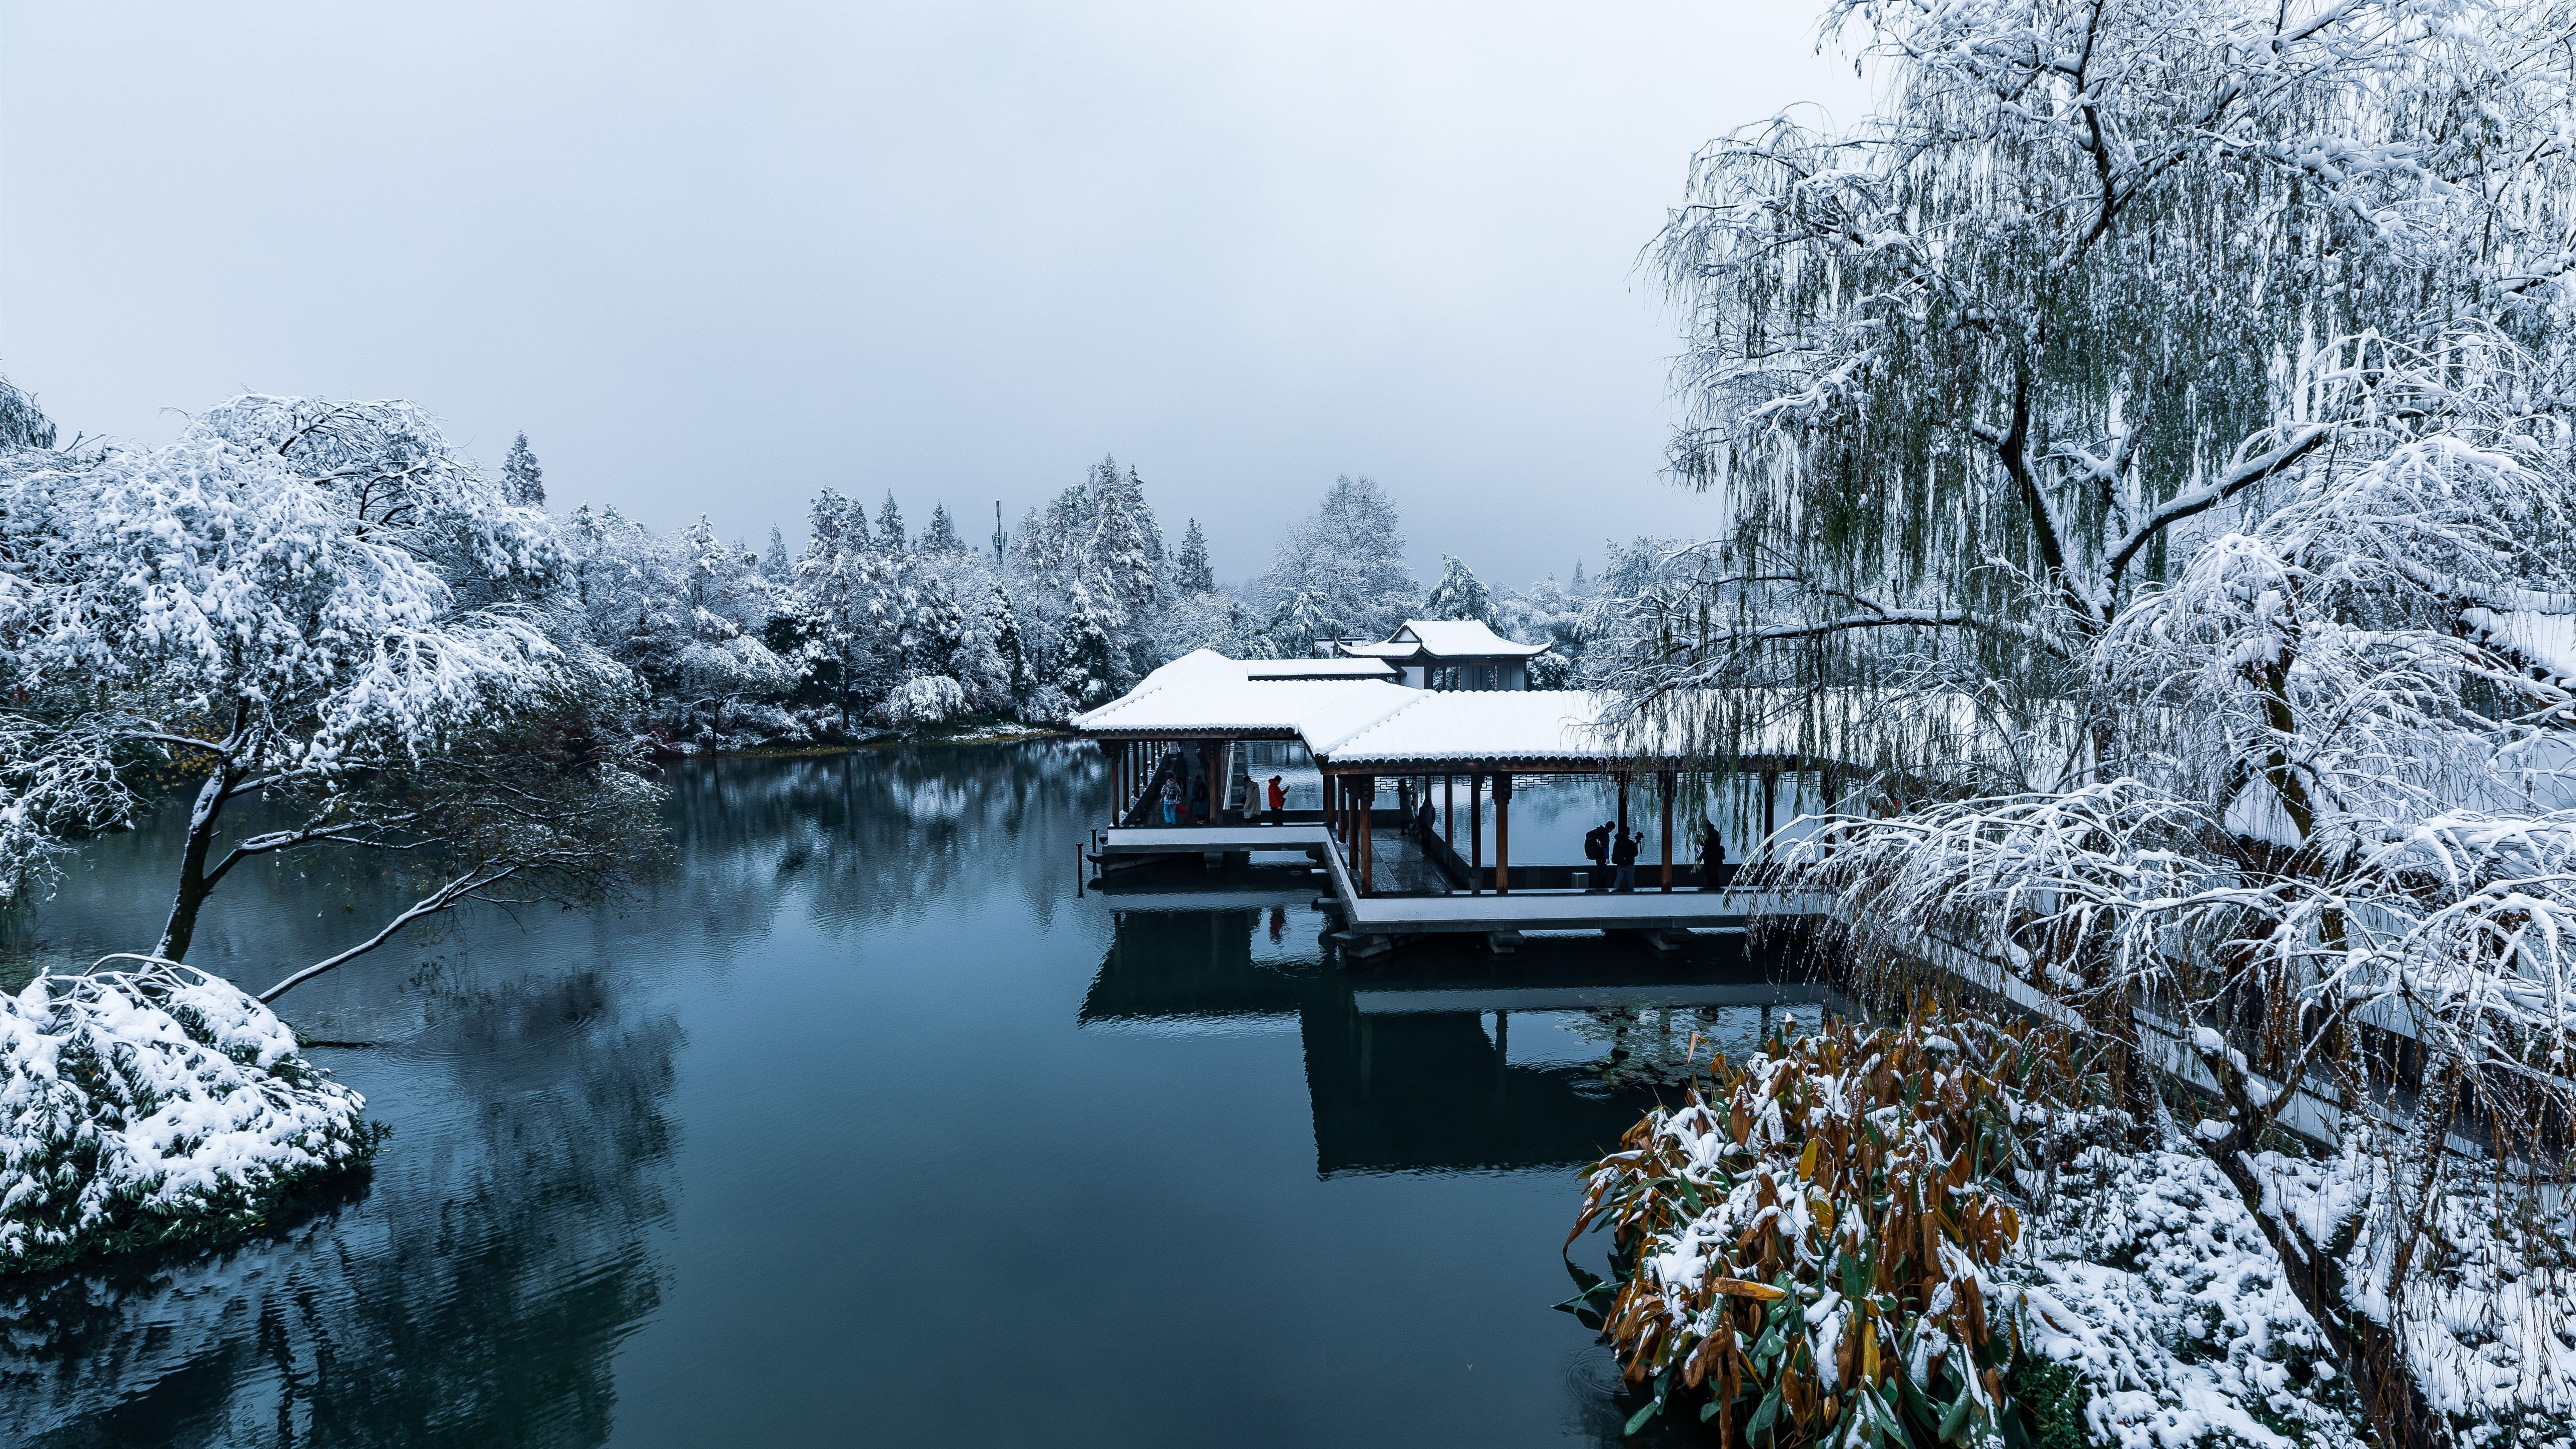 Wallpaper China, Hangzhou, park, snow, trees, lake, people, winter 5120x2880 UHD 5K Picture, Image